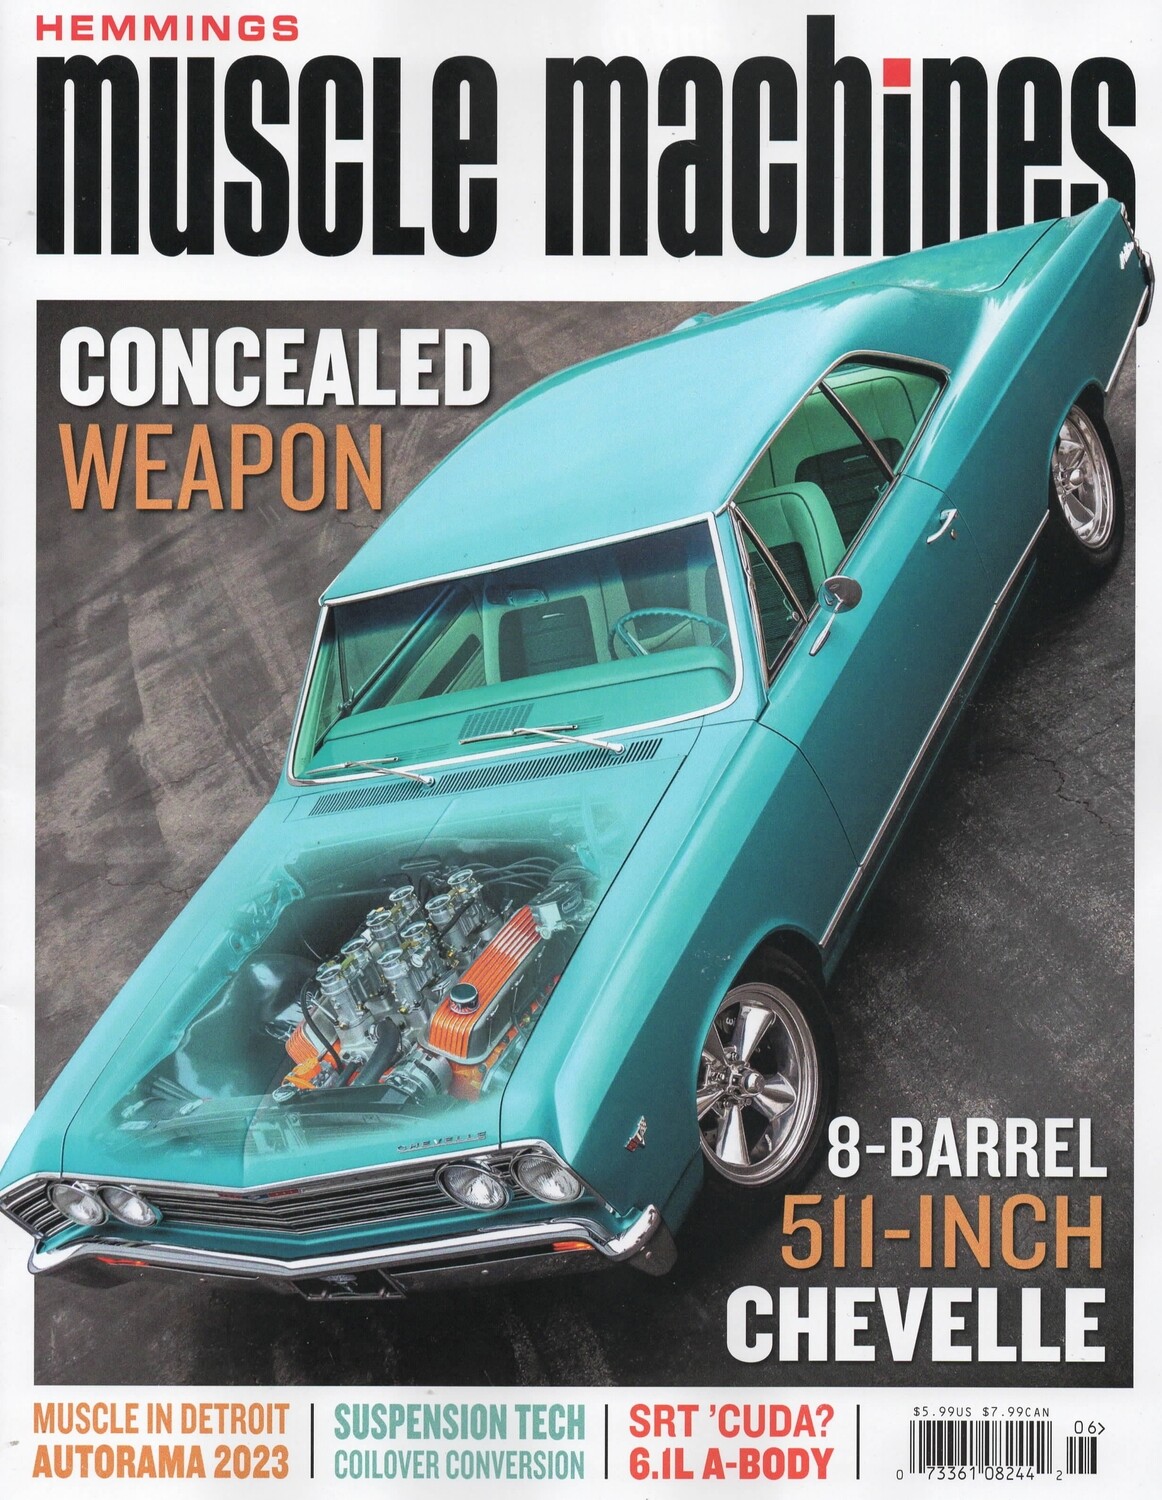 Hemmings Muscle Machines June 2023- Inmate Magazines